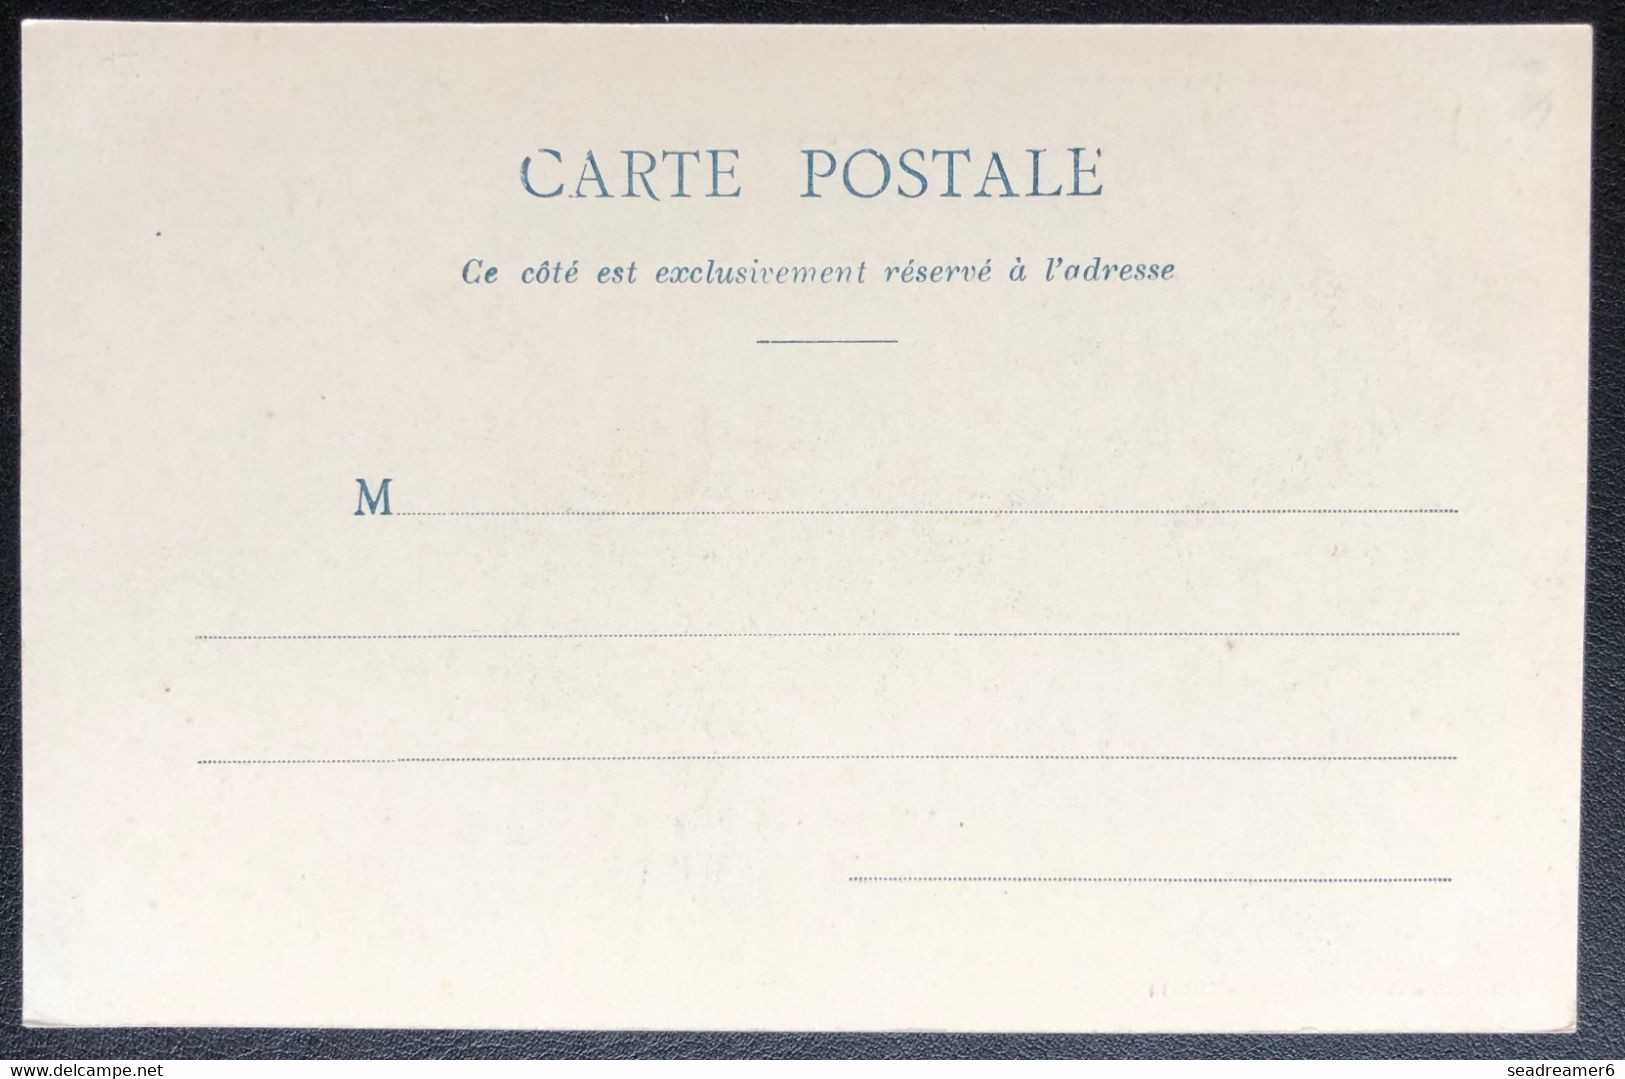 Carte Postale Originale De Saint-Pierre Et Miquelon 1900/1920 "Le Gouvernement" TTB - Saint-Pierre-et-Miquelon